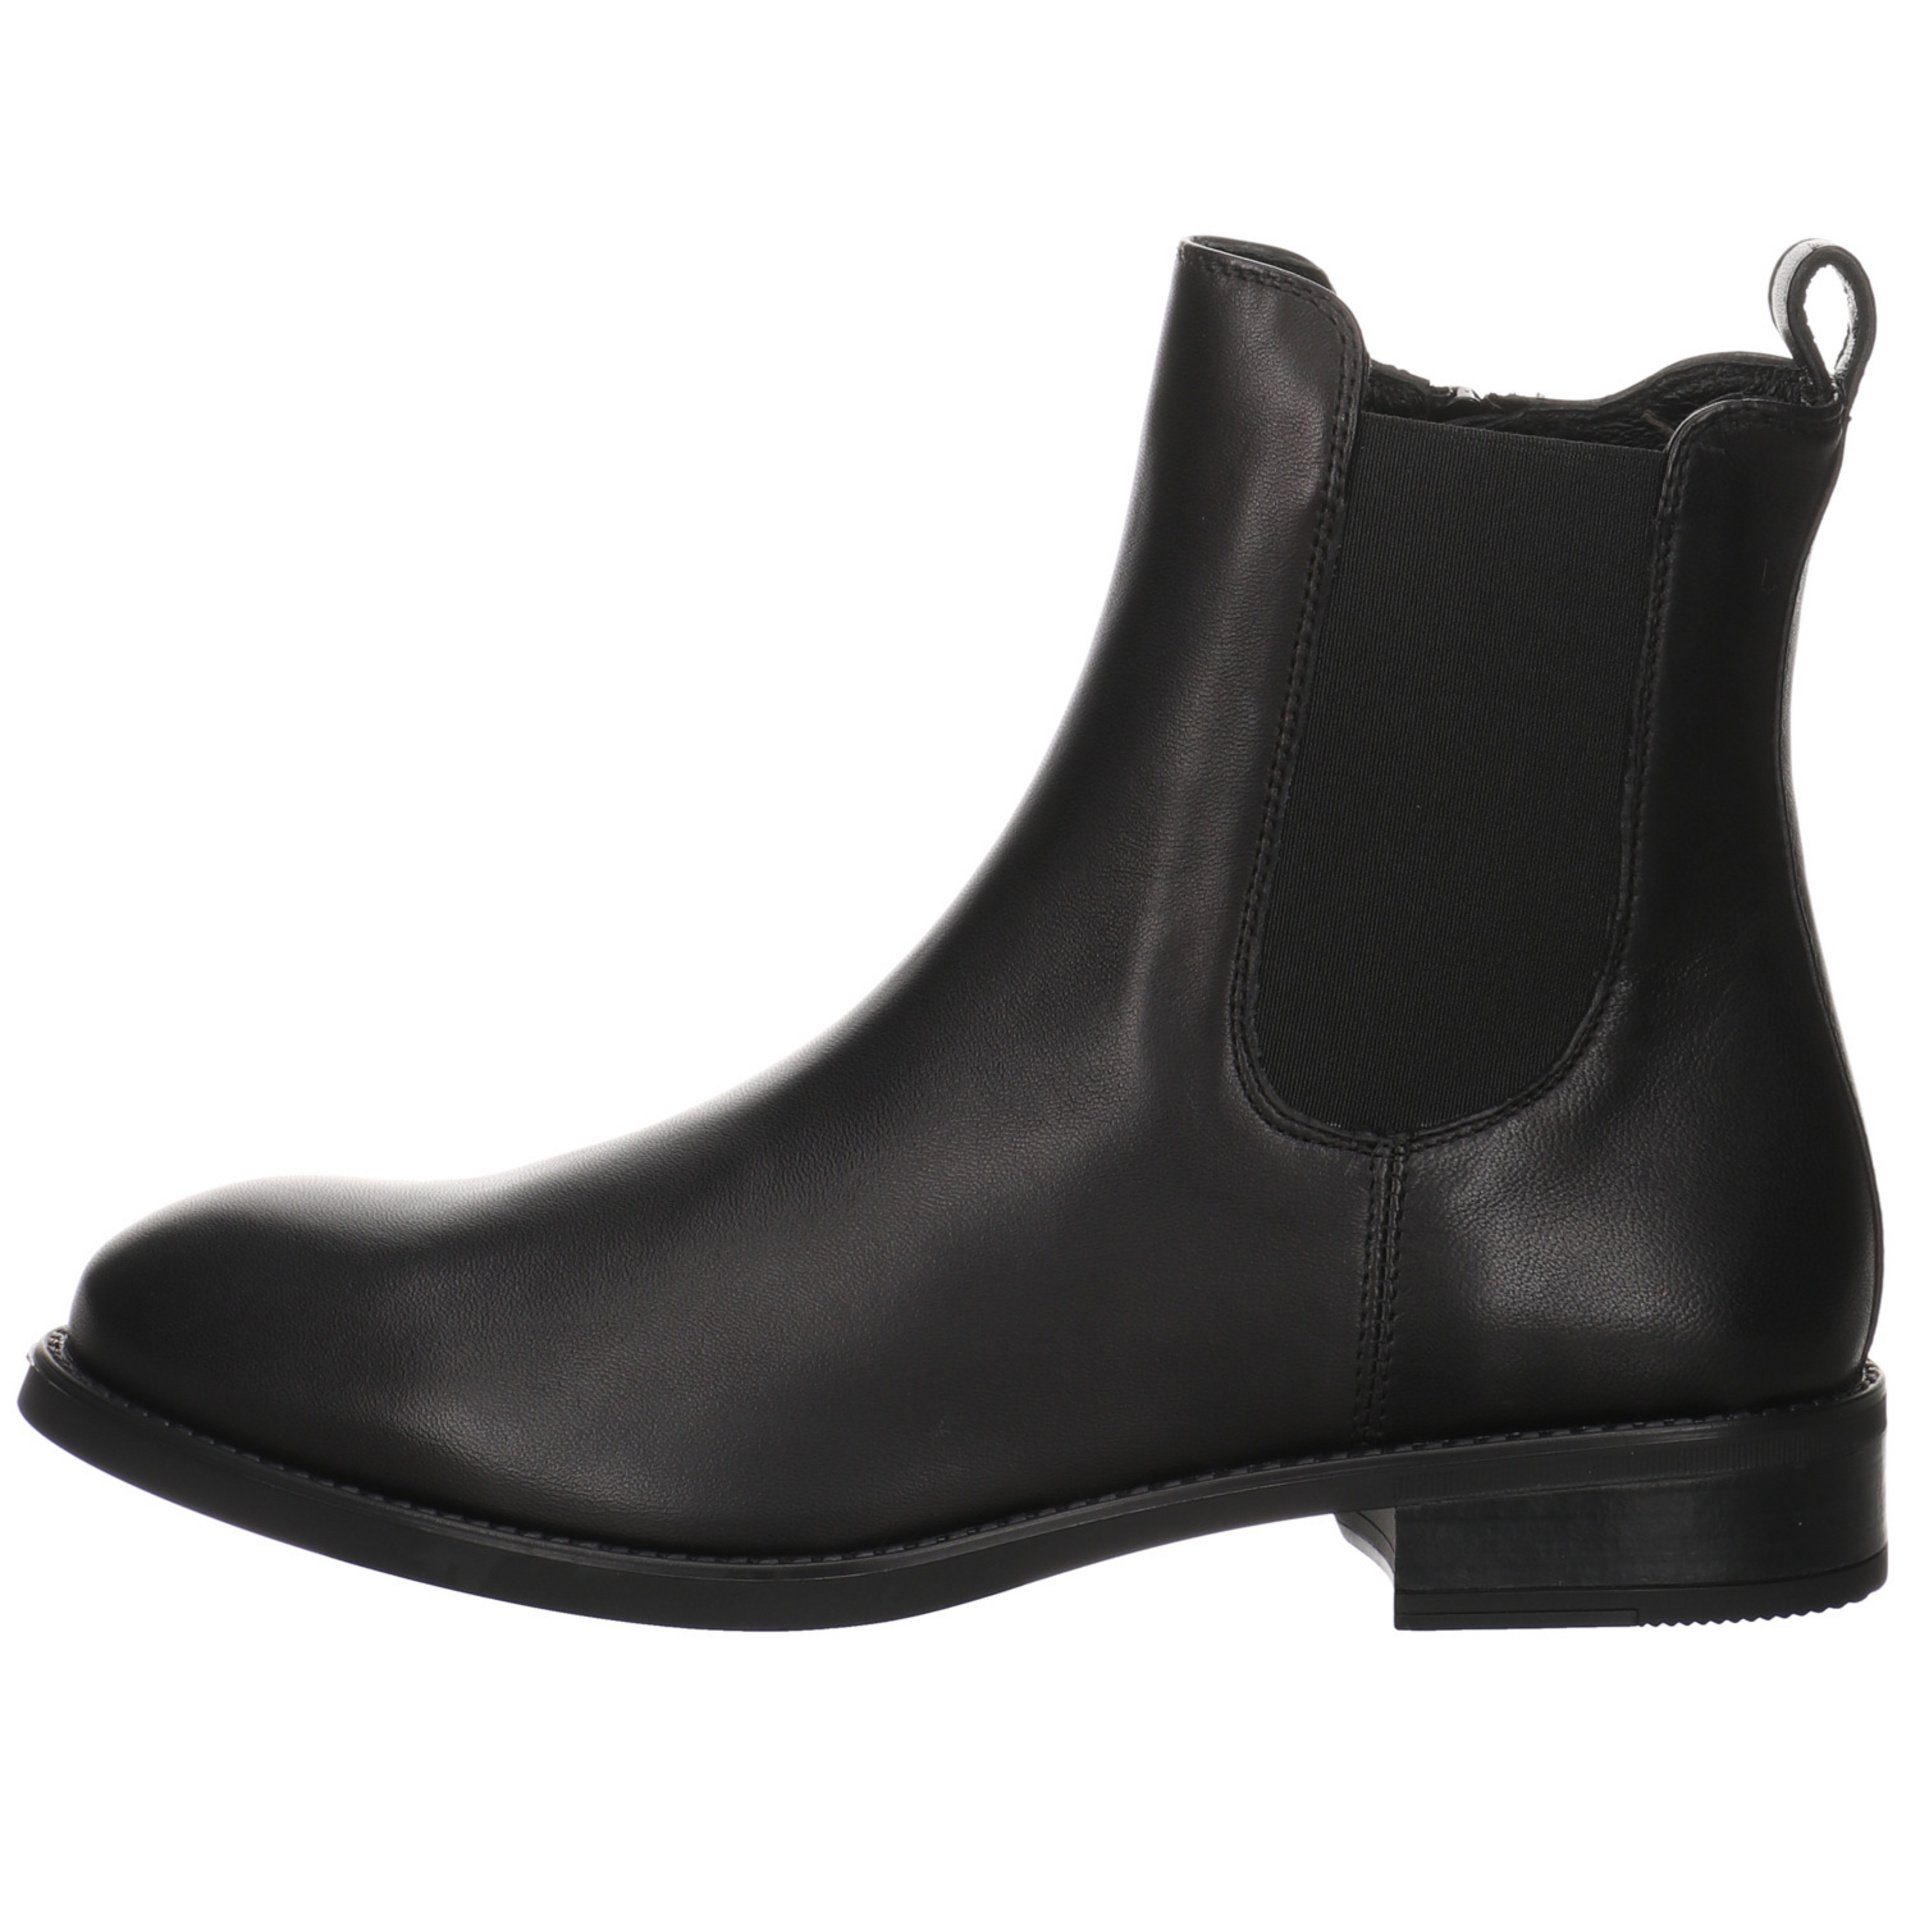 Damen Barty Unisa black Stiefeletten Stiefelette Chelsea Schuhe Boots Leder-/Textilkombination